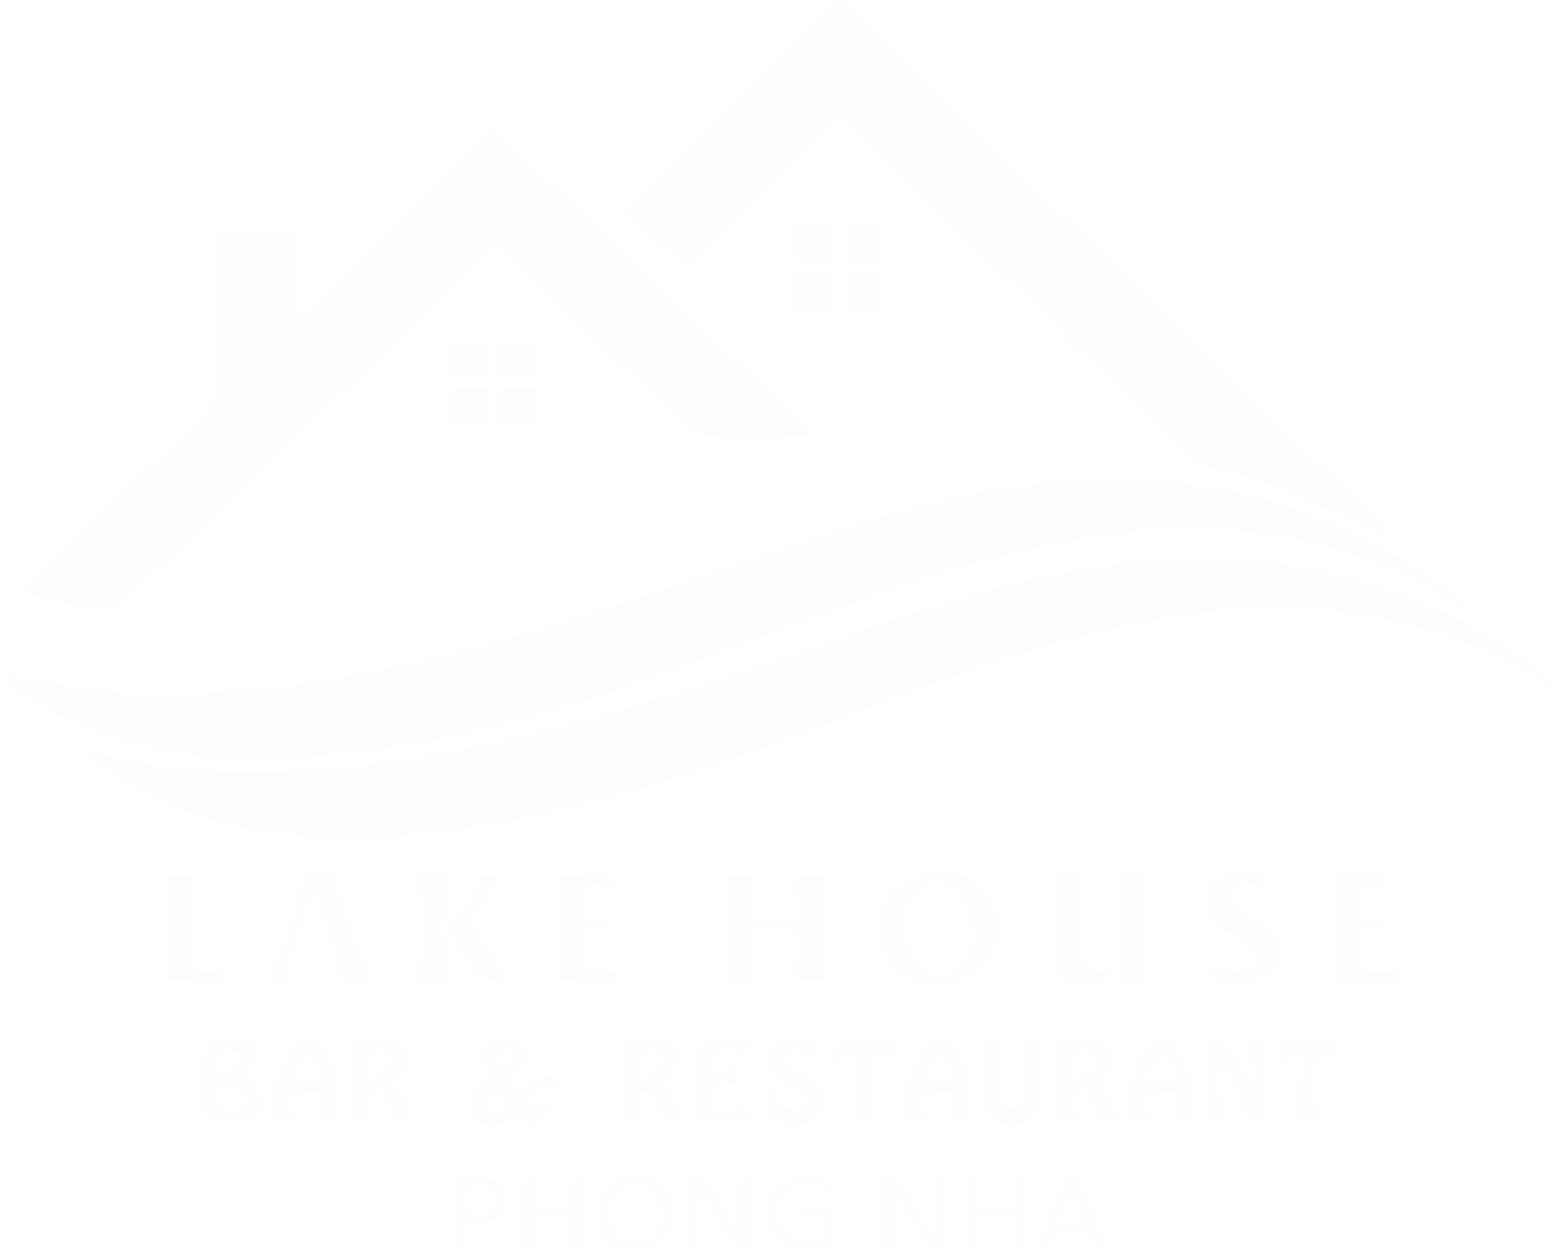 Lake House Restaurant